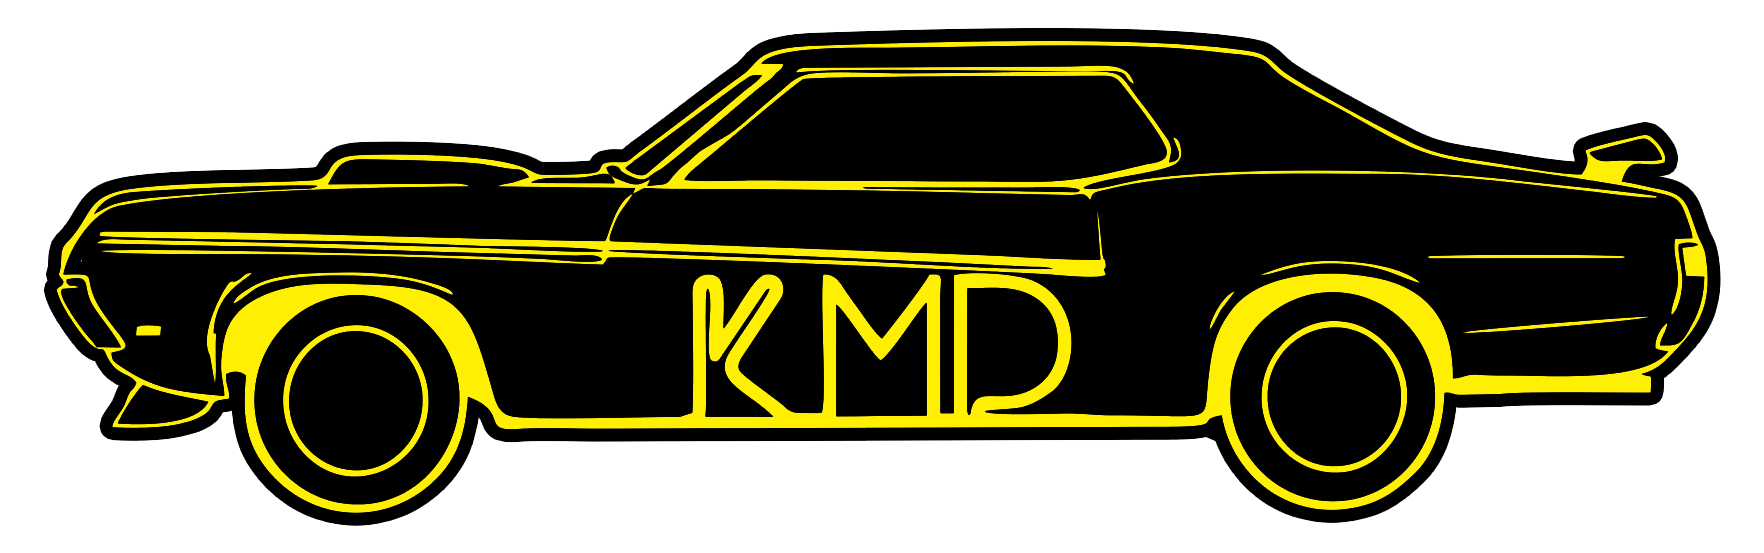 CarPro Sampler Kit  KMD Premium Detailing Services